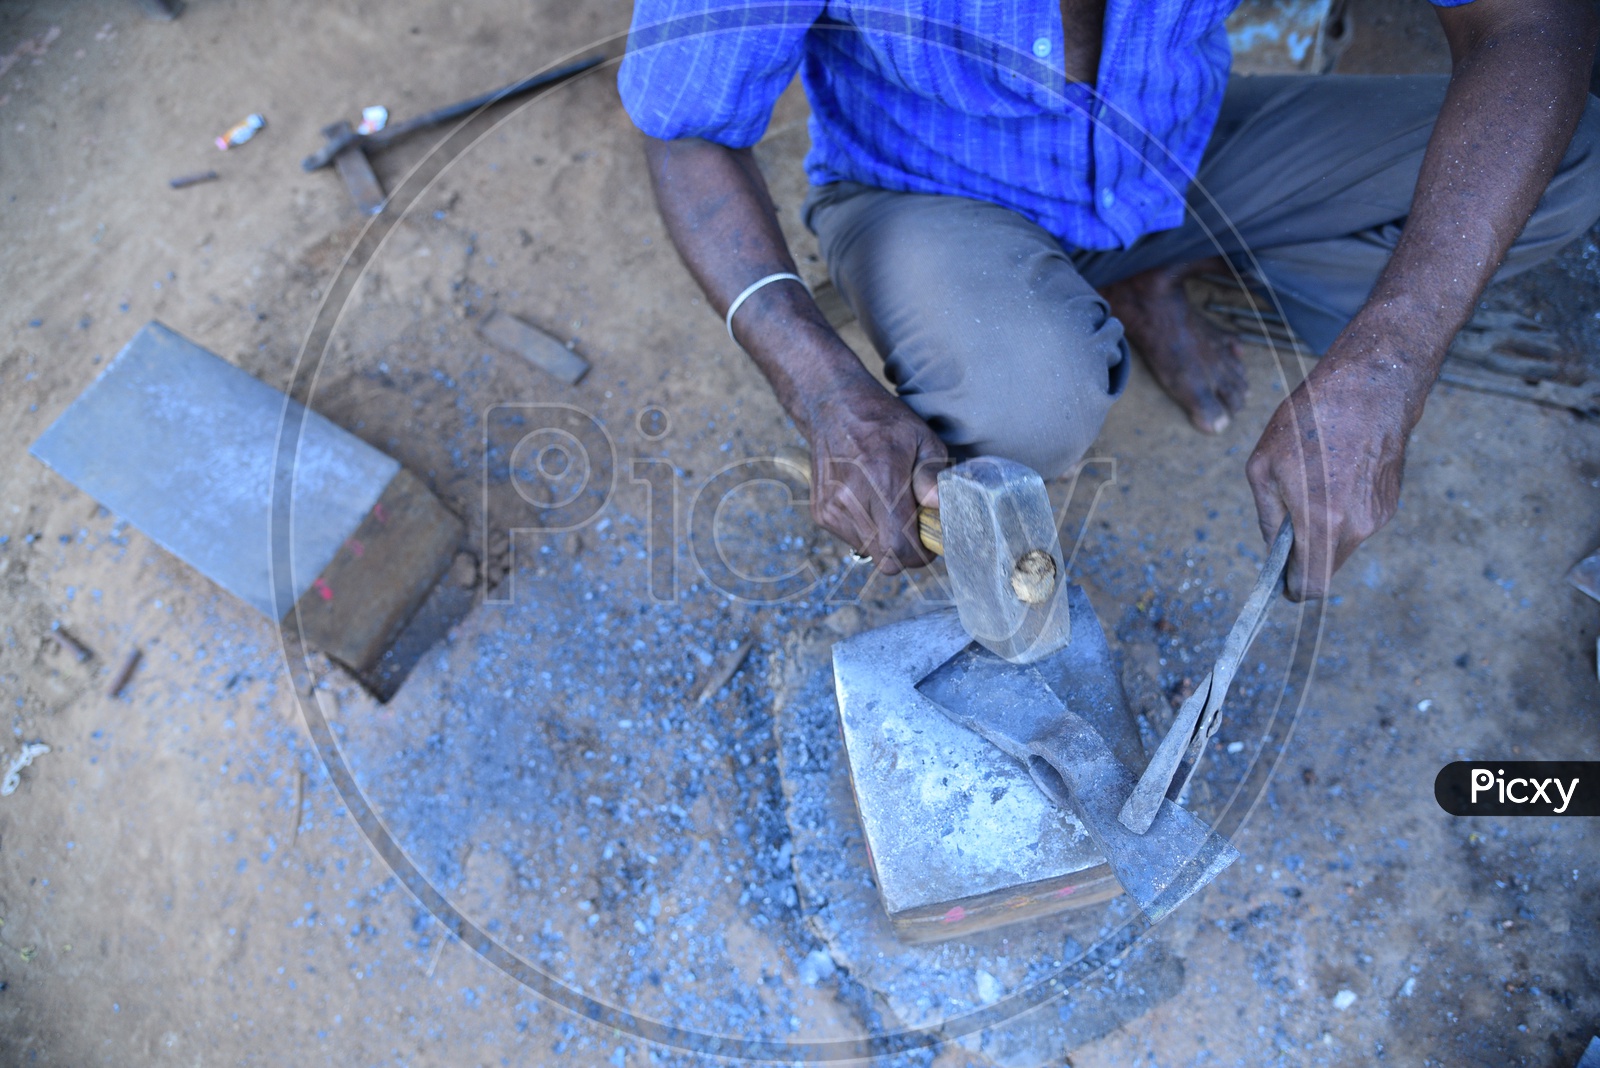 Indian Blacksmith Shaping the Hot Metal using Hammer